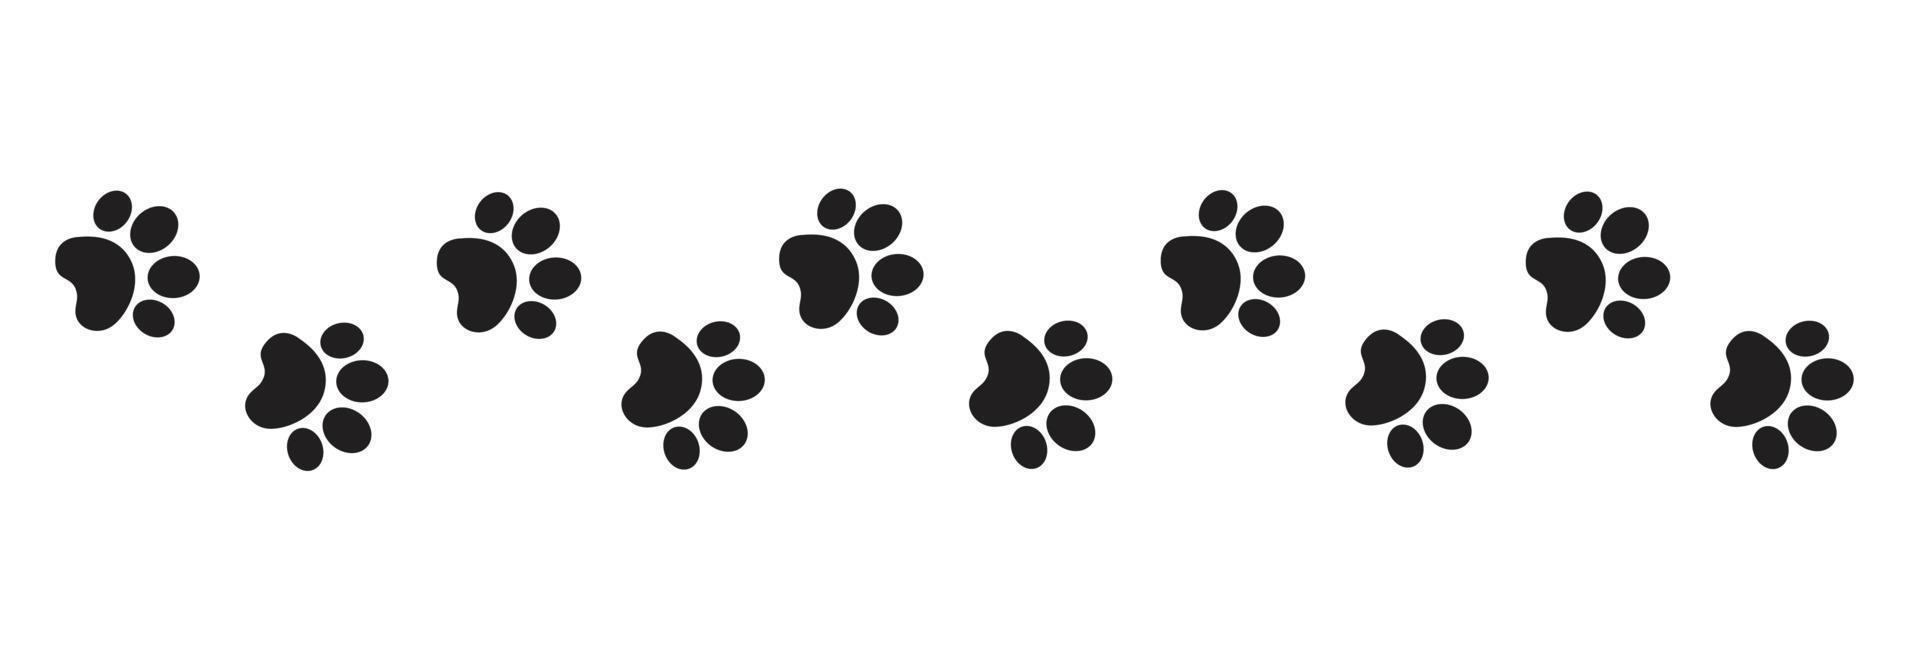 dog paws footprint banner vector illustration